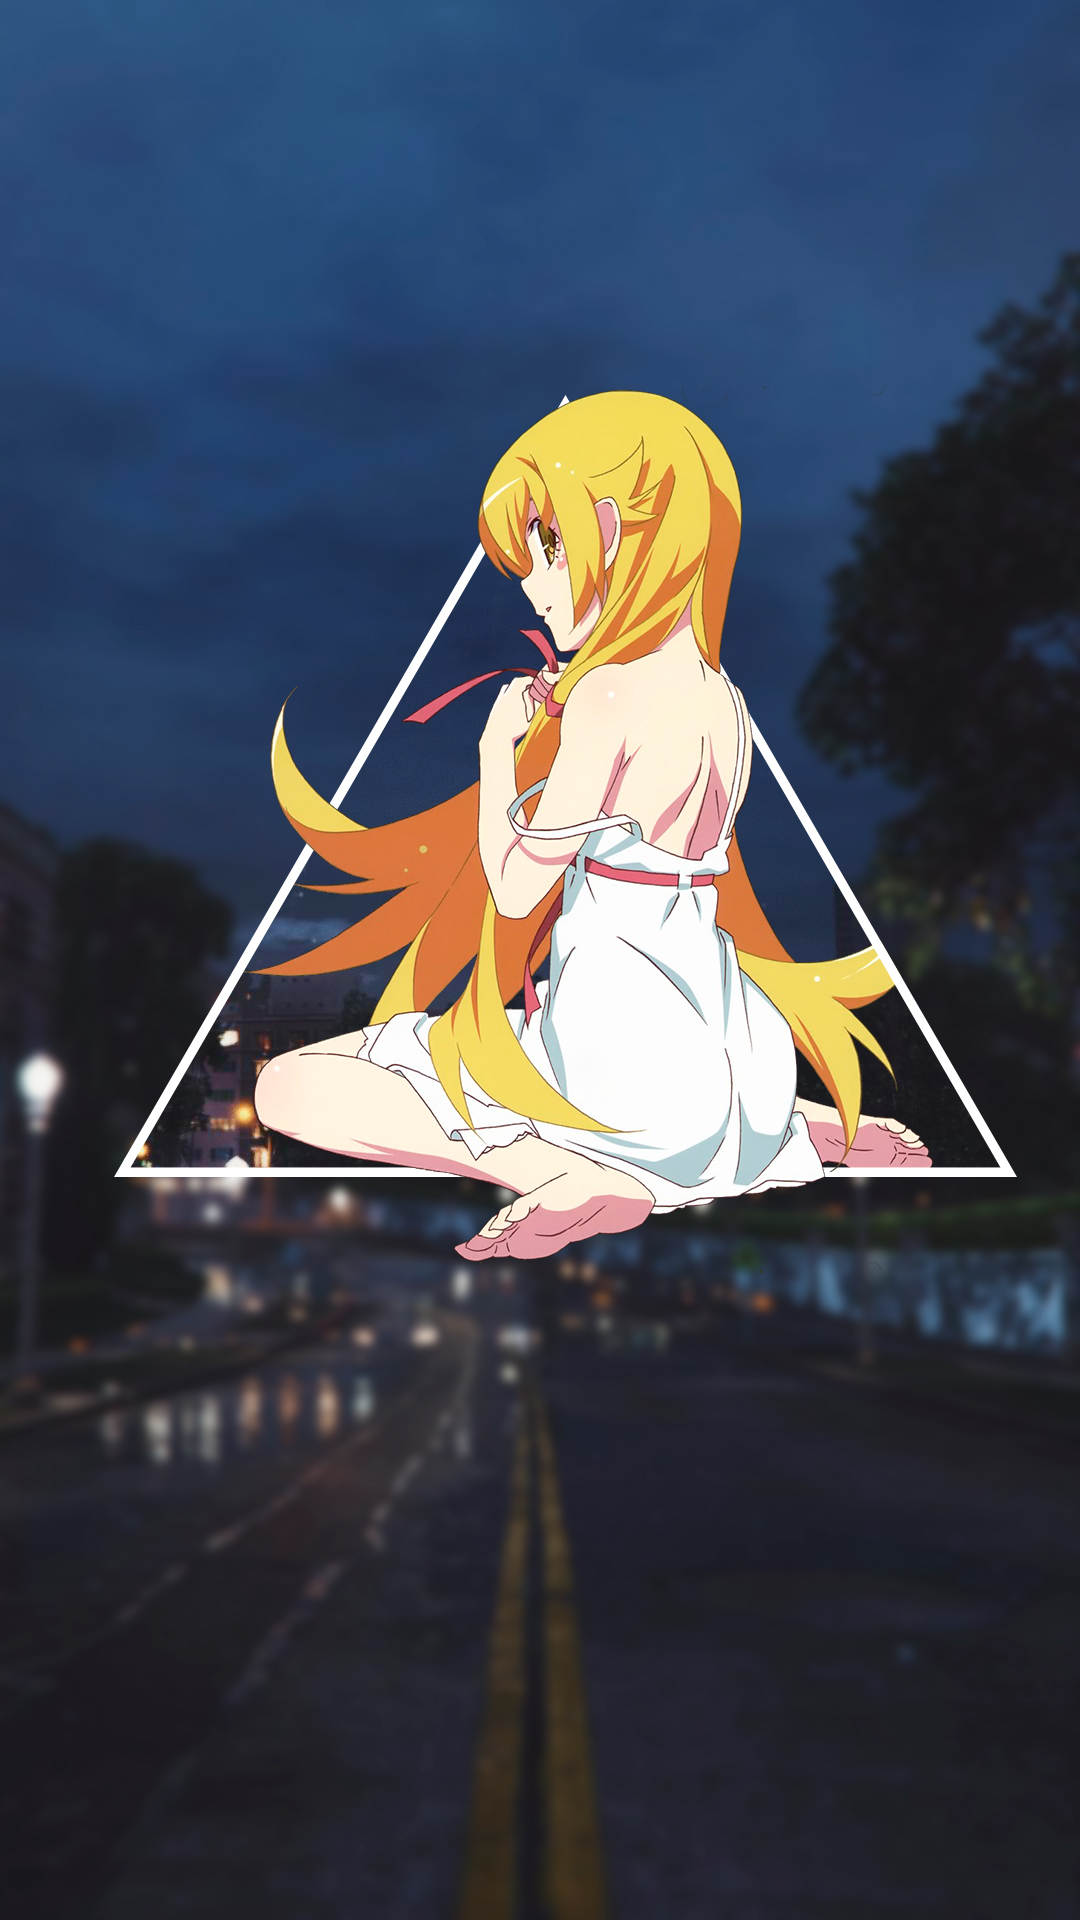 Anime 1080x1920 anime Monogatari Series anime girls triangle blonde Oshino Shinobu picture-in-picture